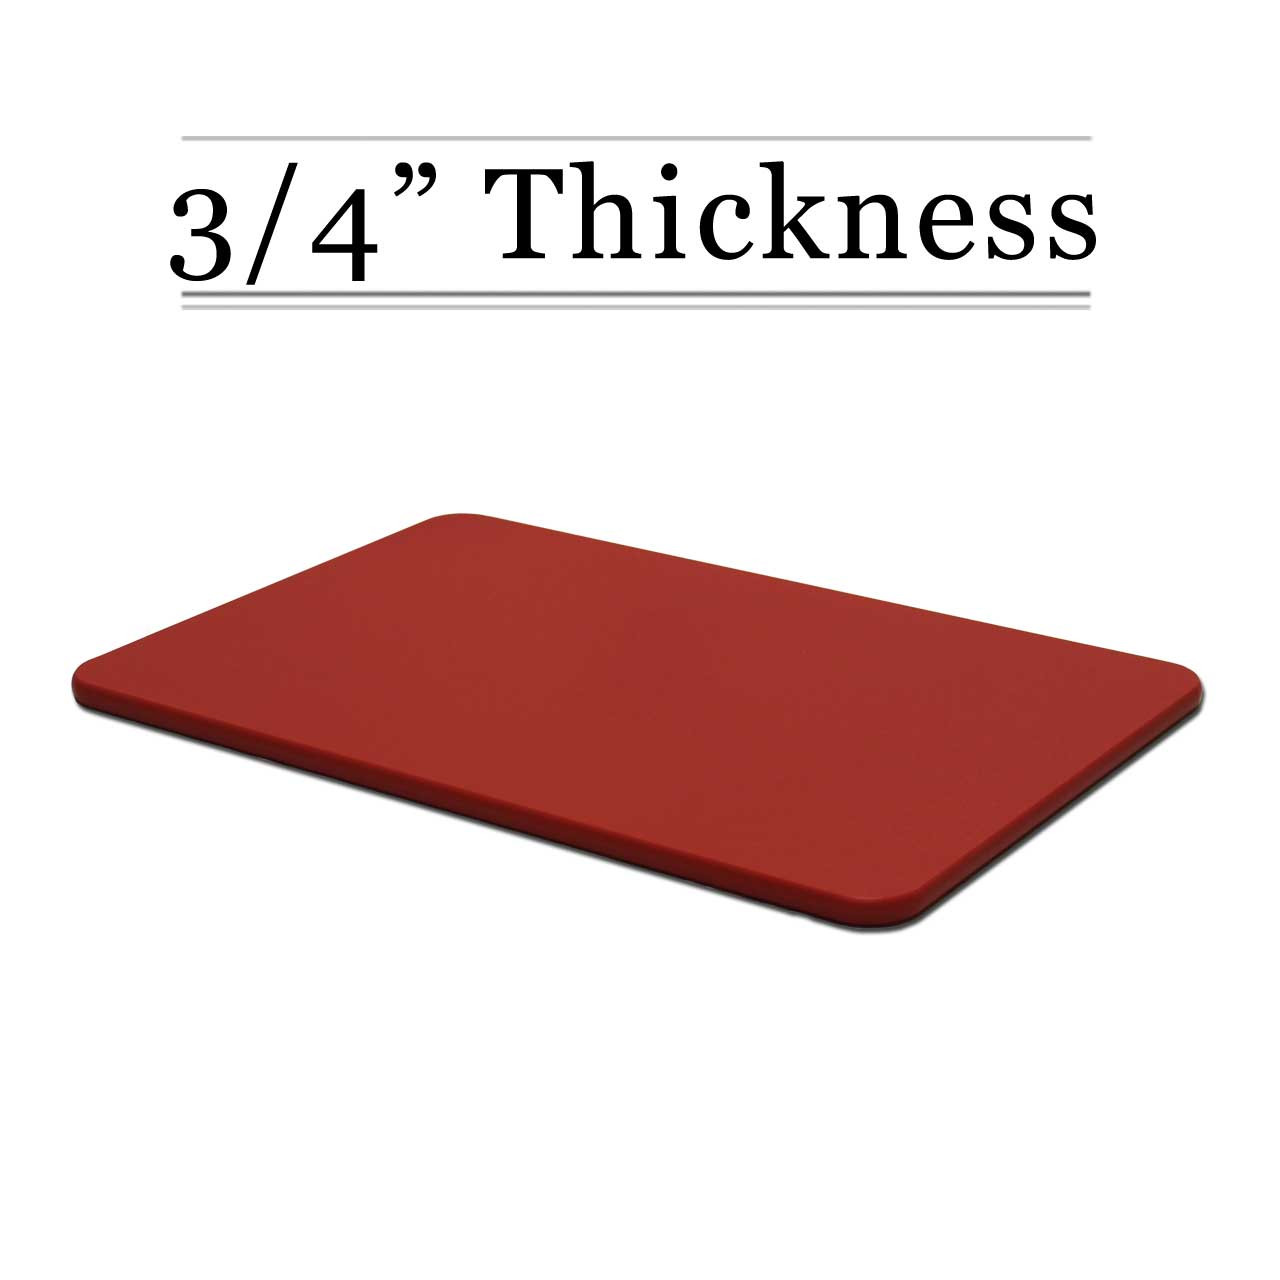 3/4 Thick Red Custom Cutting Board